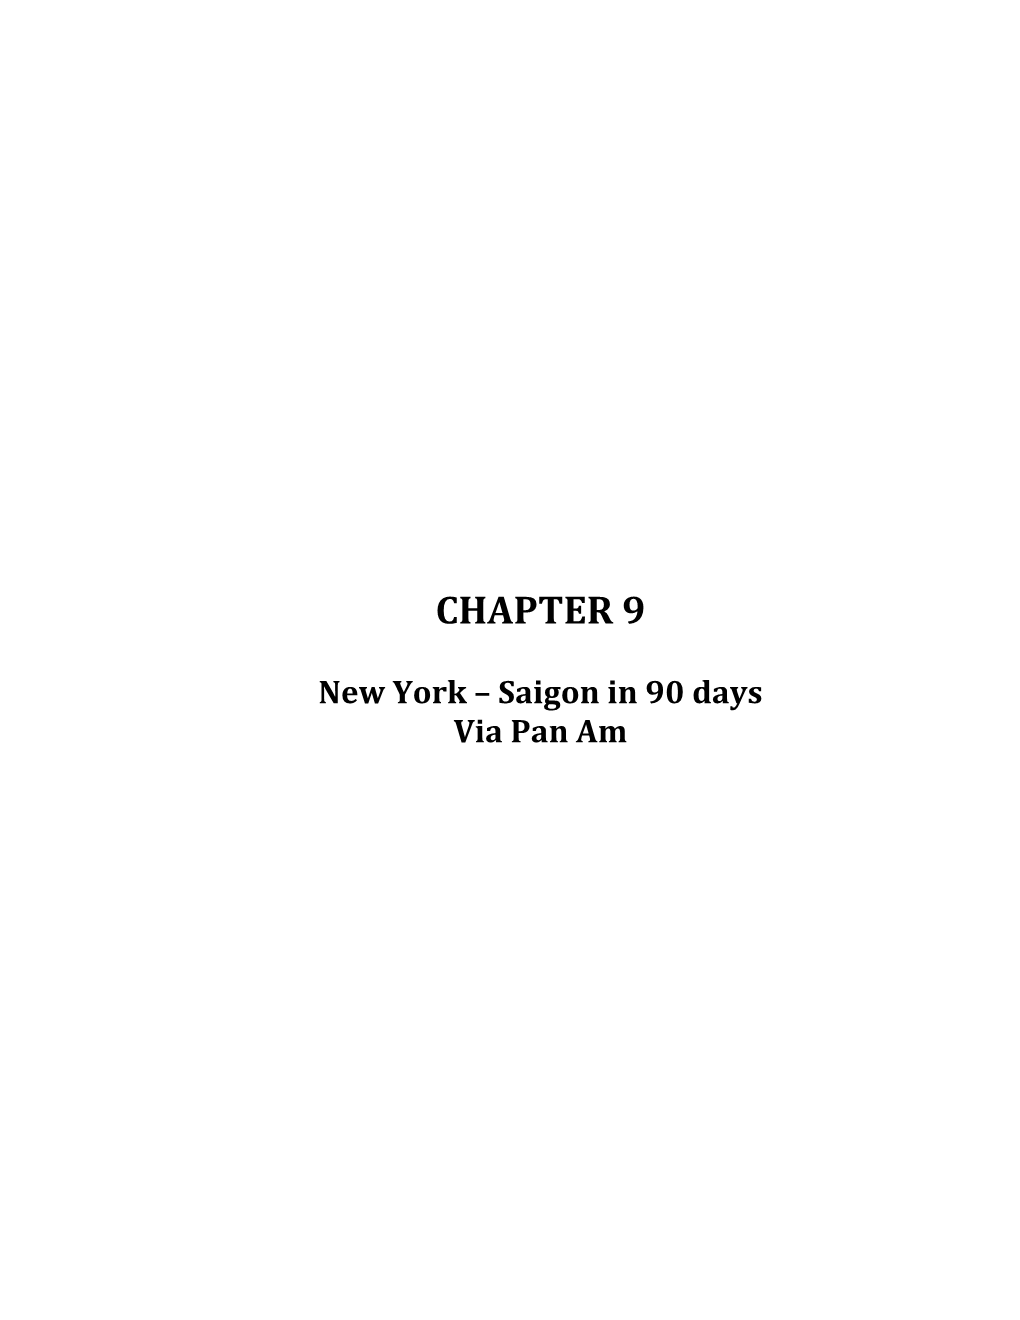 Chapter 9: New York – Saigon in 90 Days Via Pan Am